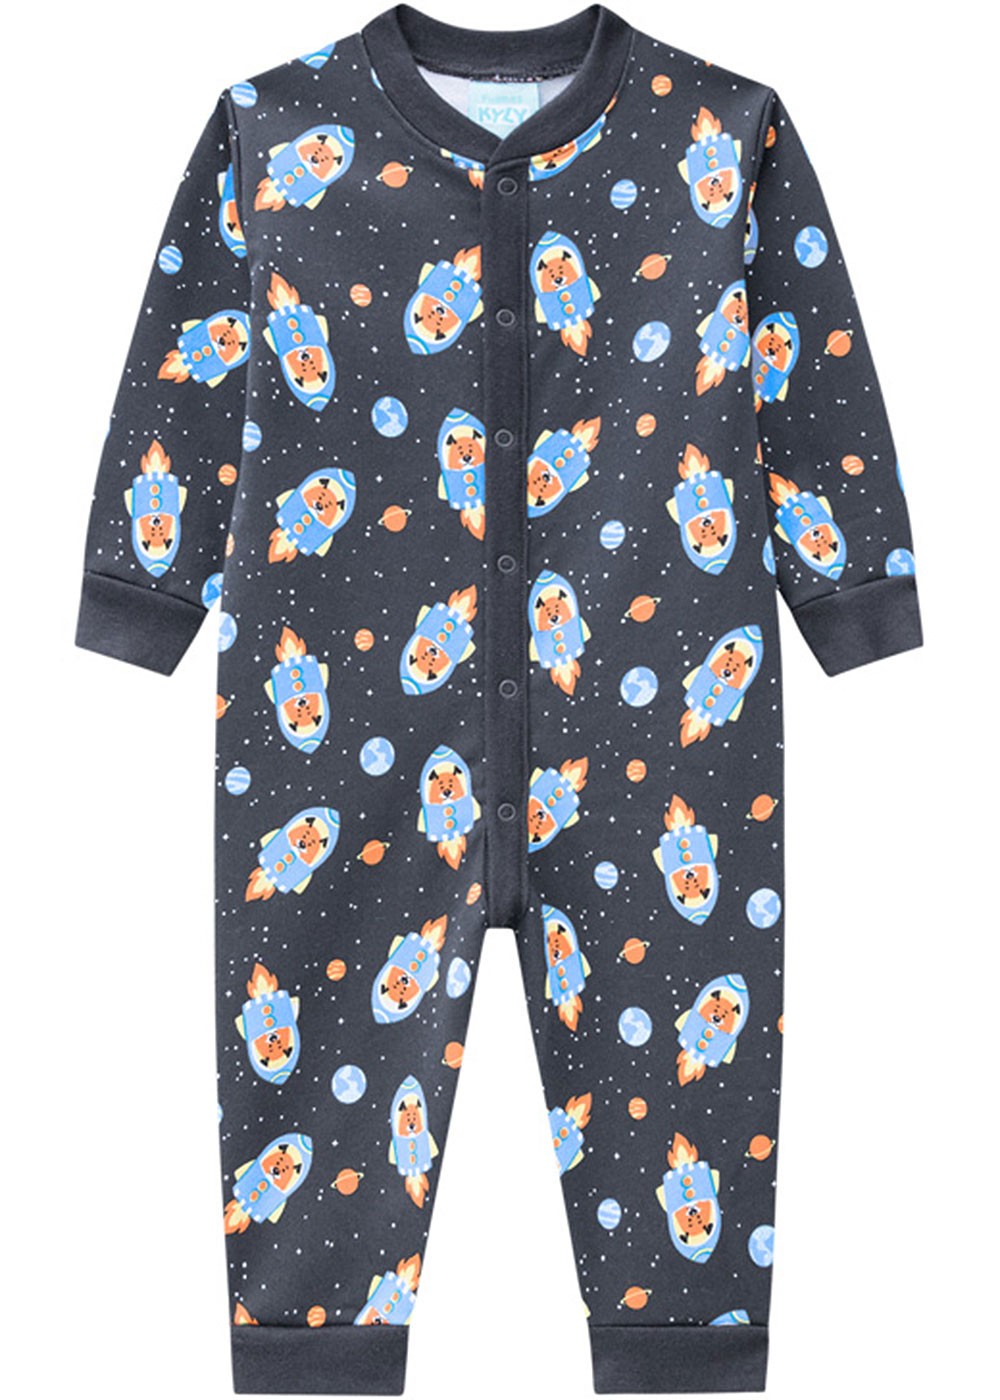 Pijama Infantil Masculino Cinza Estampado Inverno Kyly